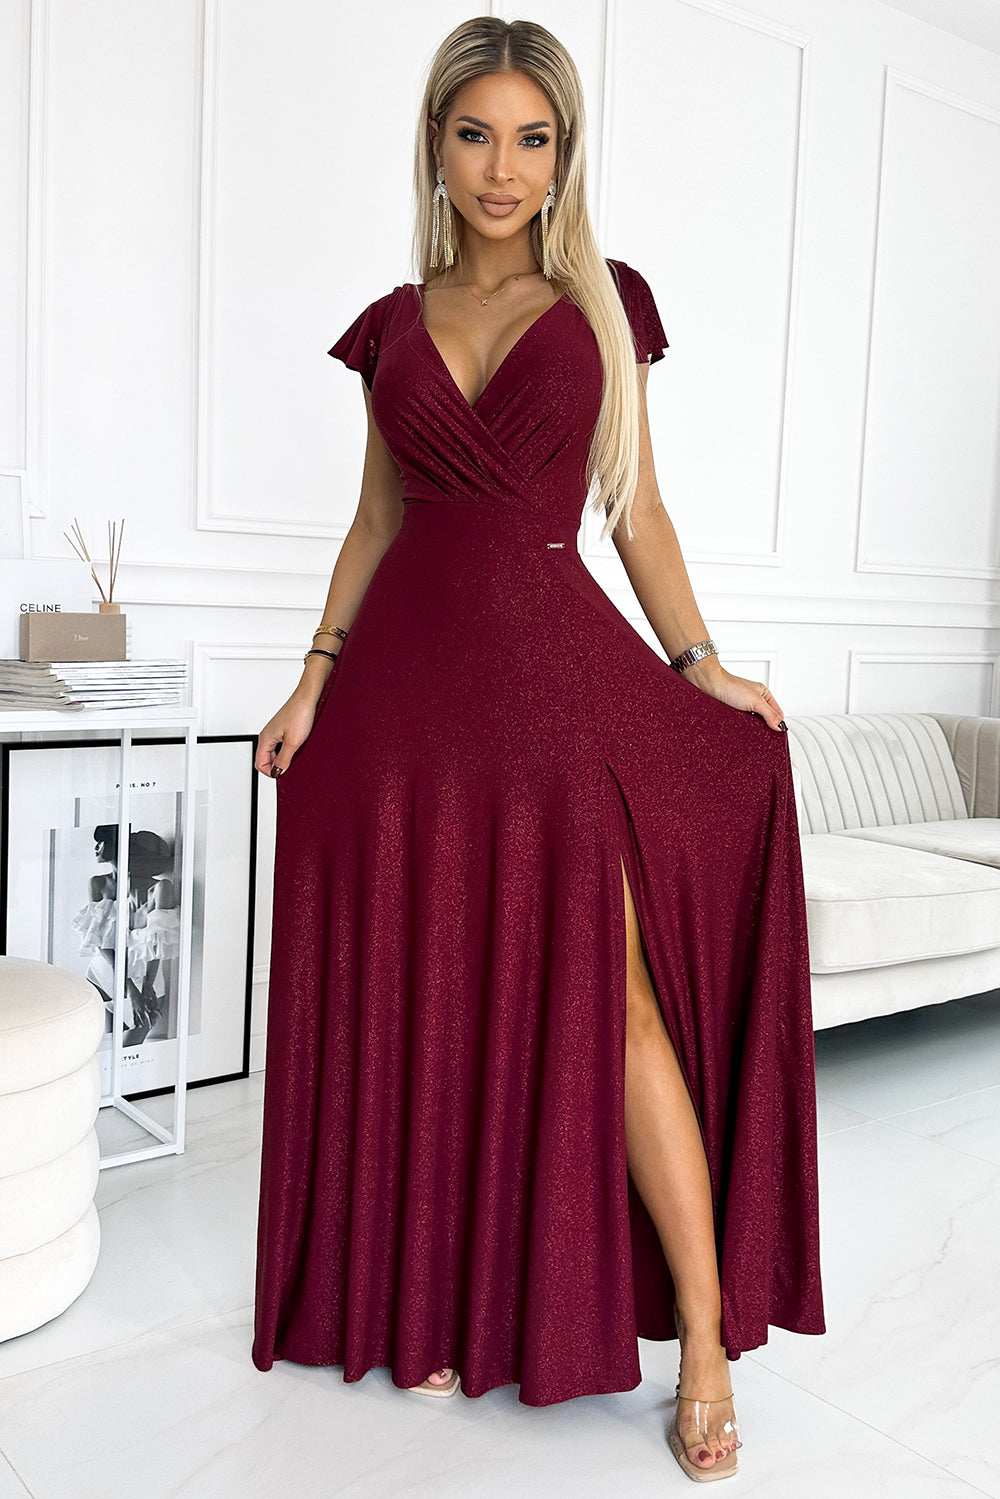 411-8 CRYSTAL long shimmering dress with a neckline - Burgundy color